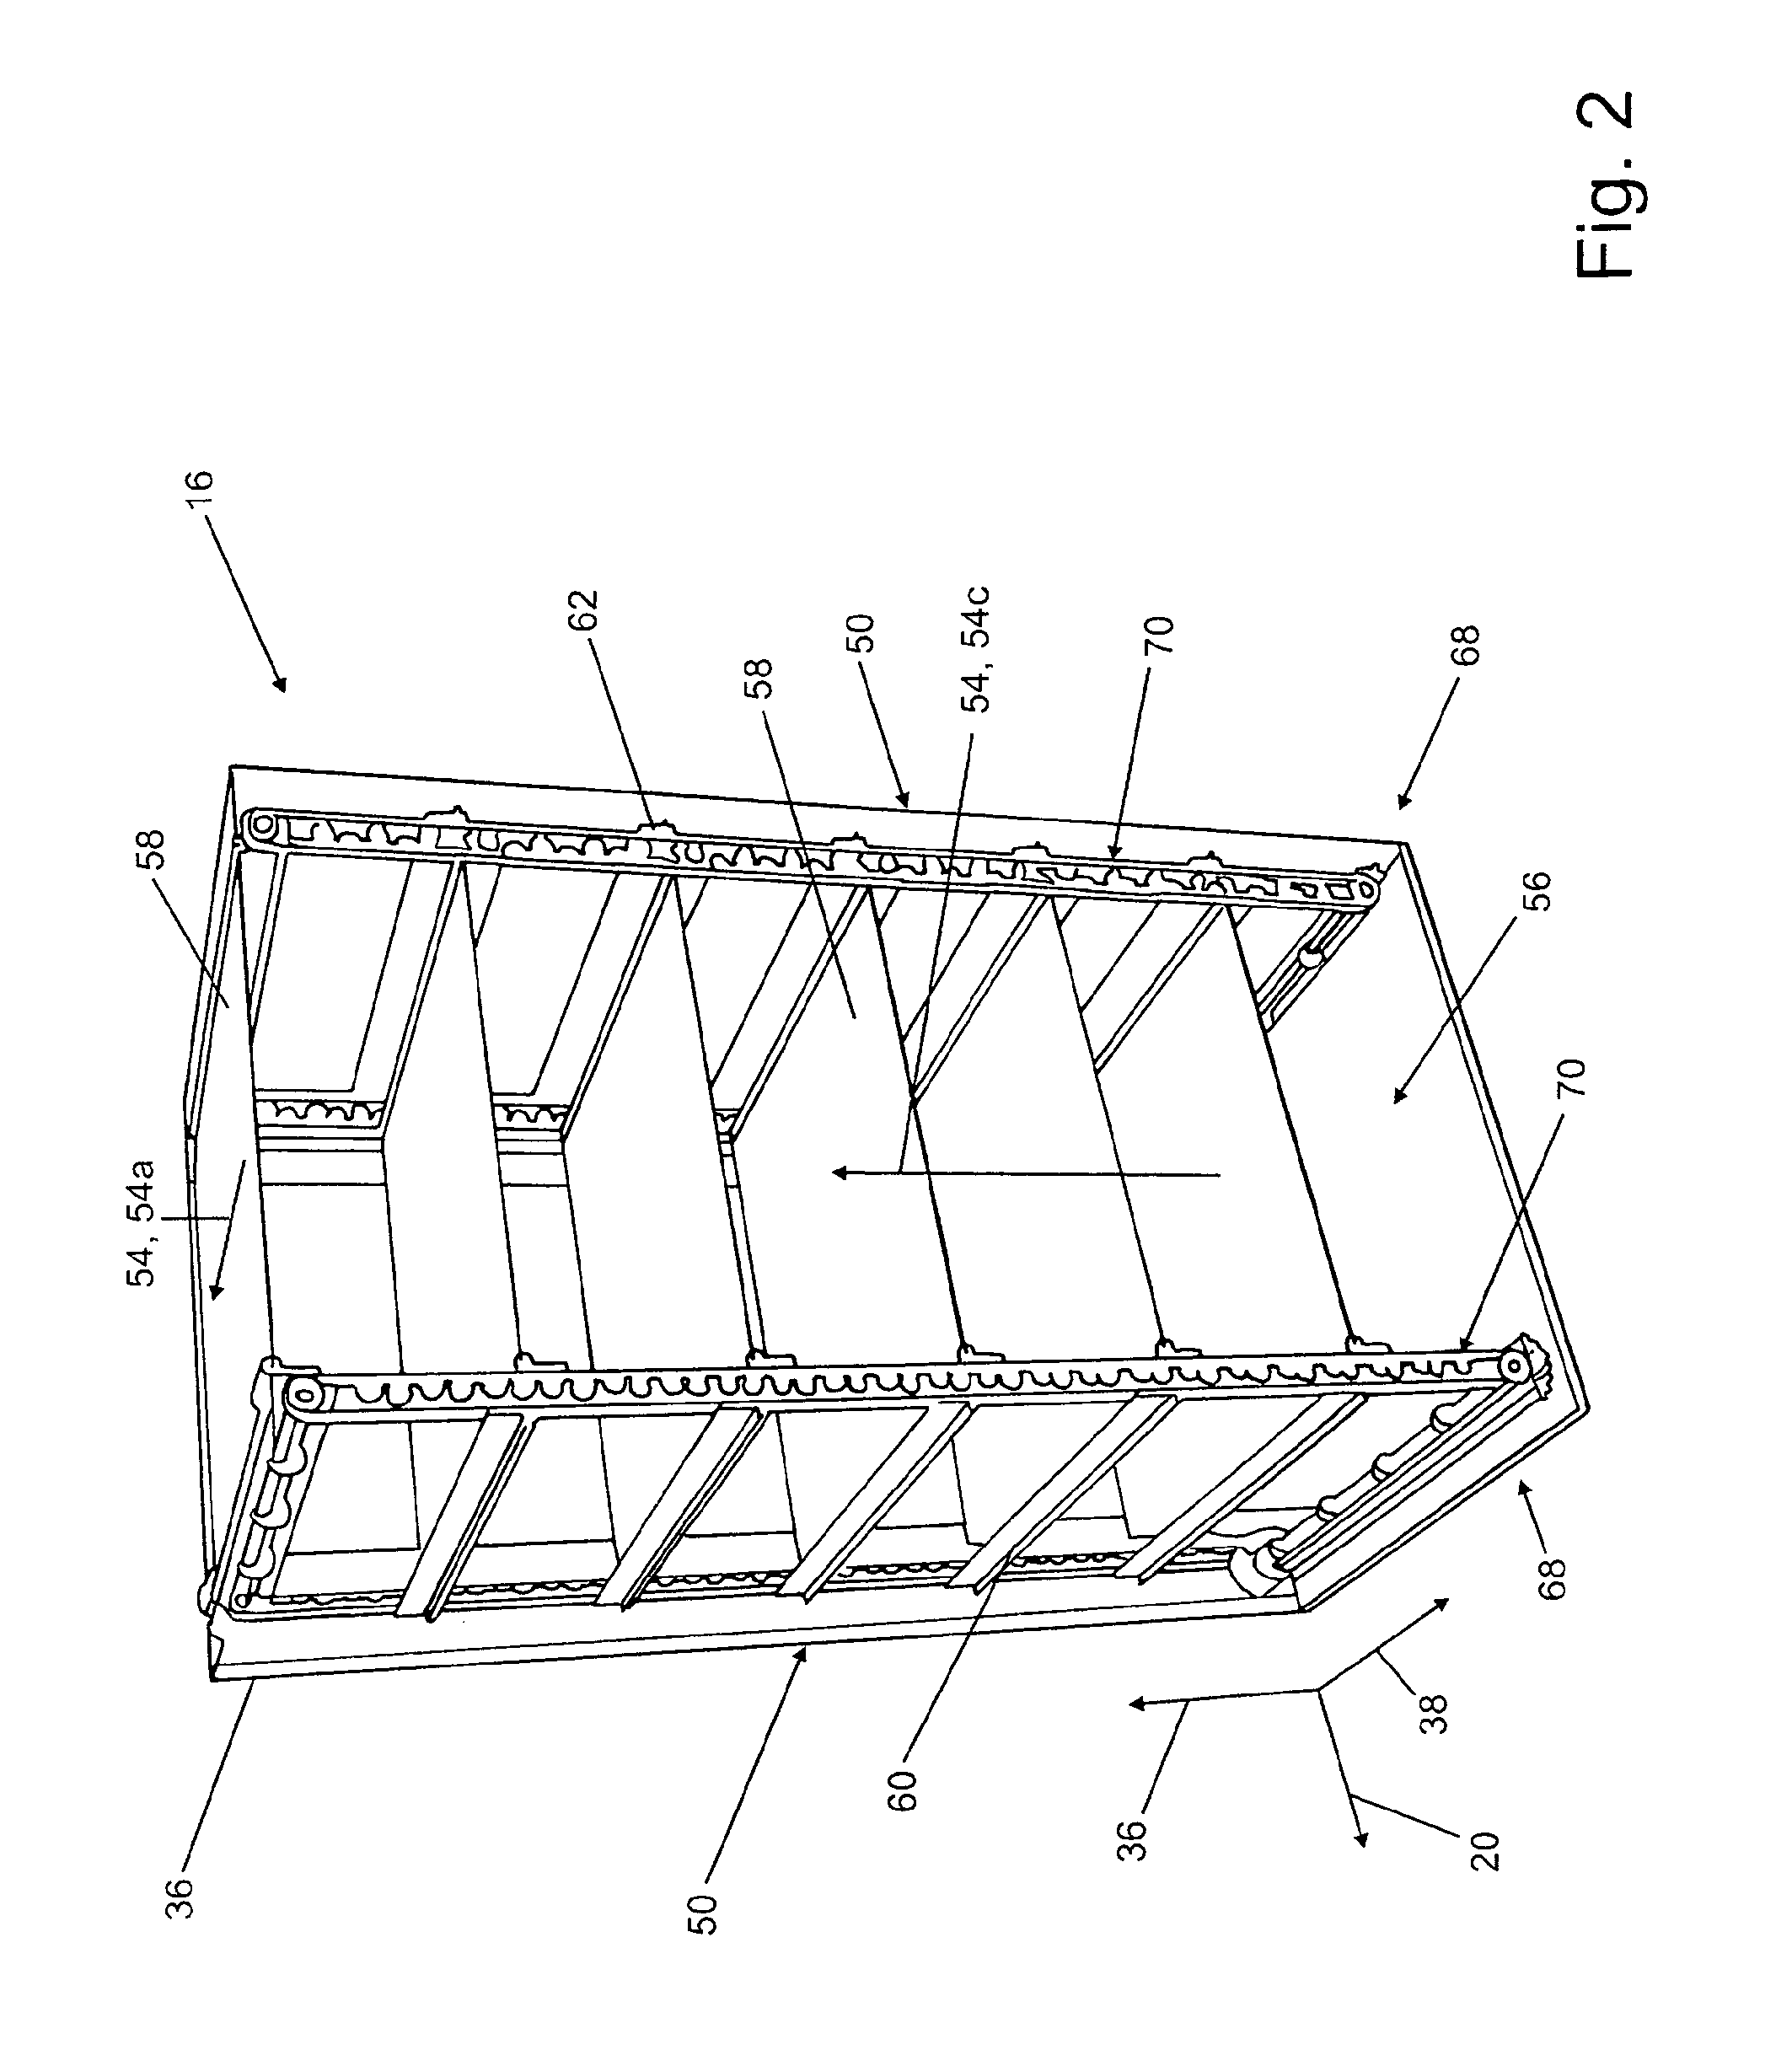 Napkin folding device